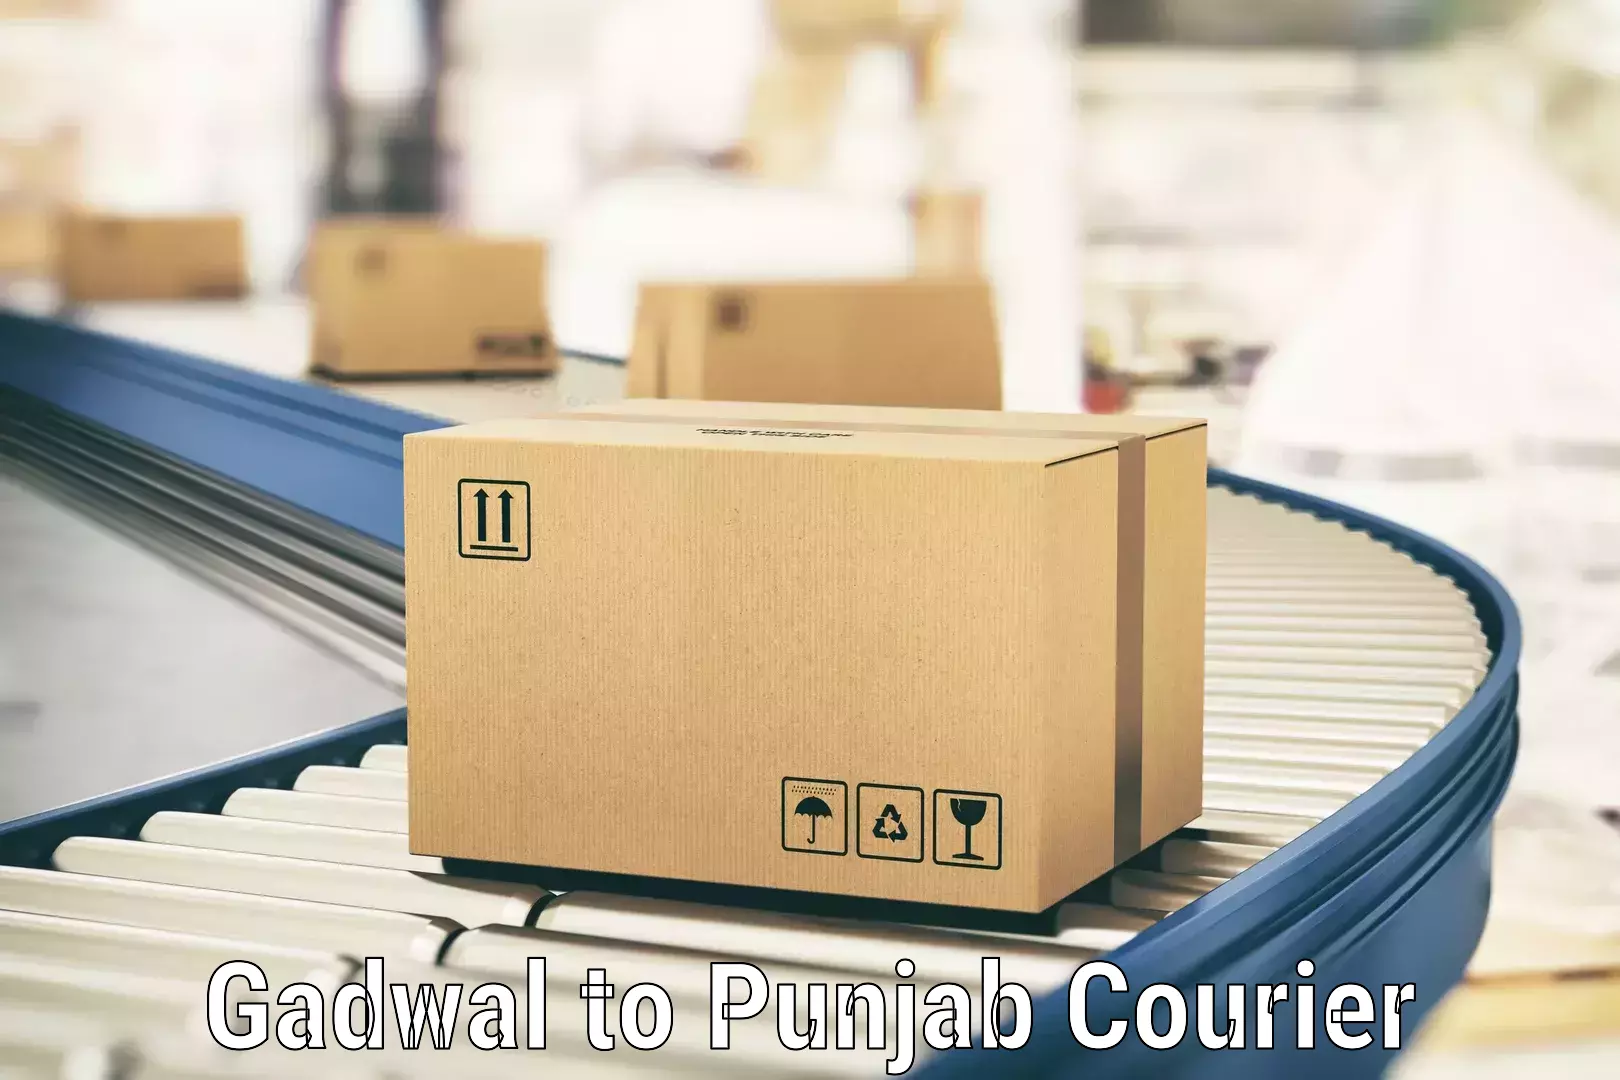 Digital courier platforms Gadwal to Patiala